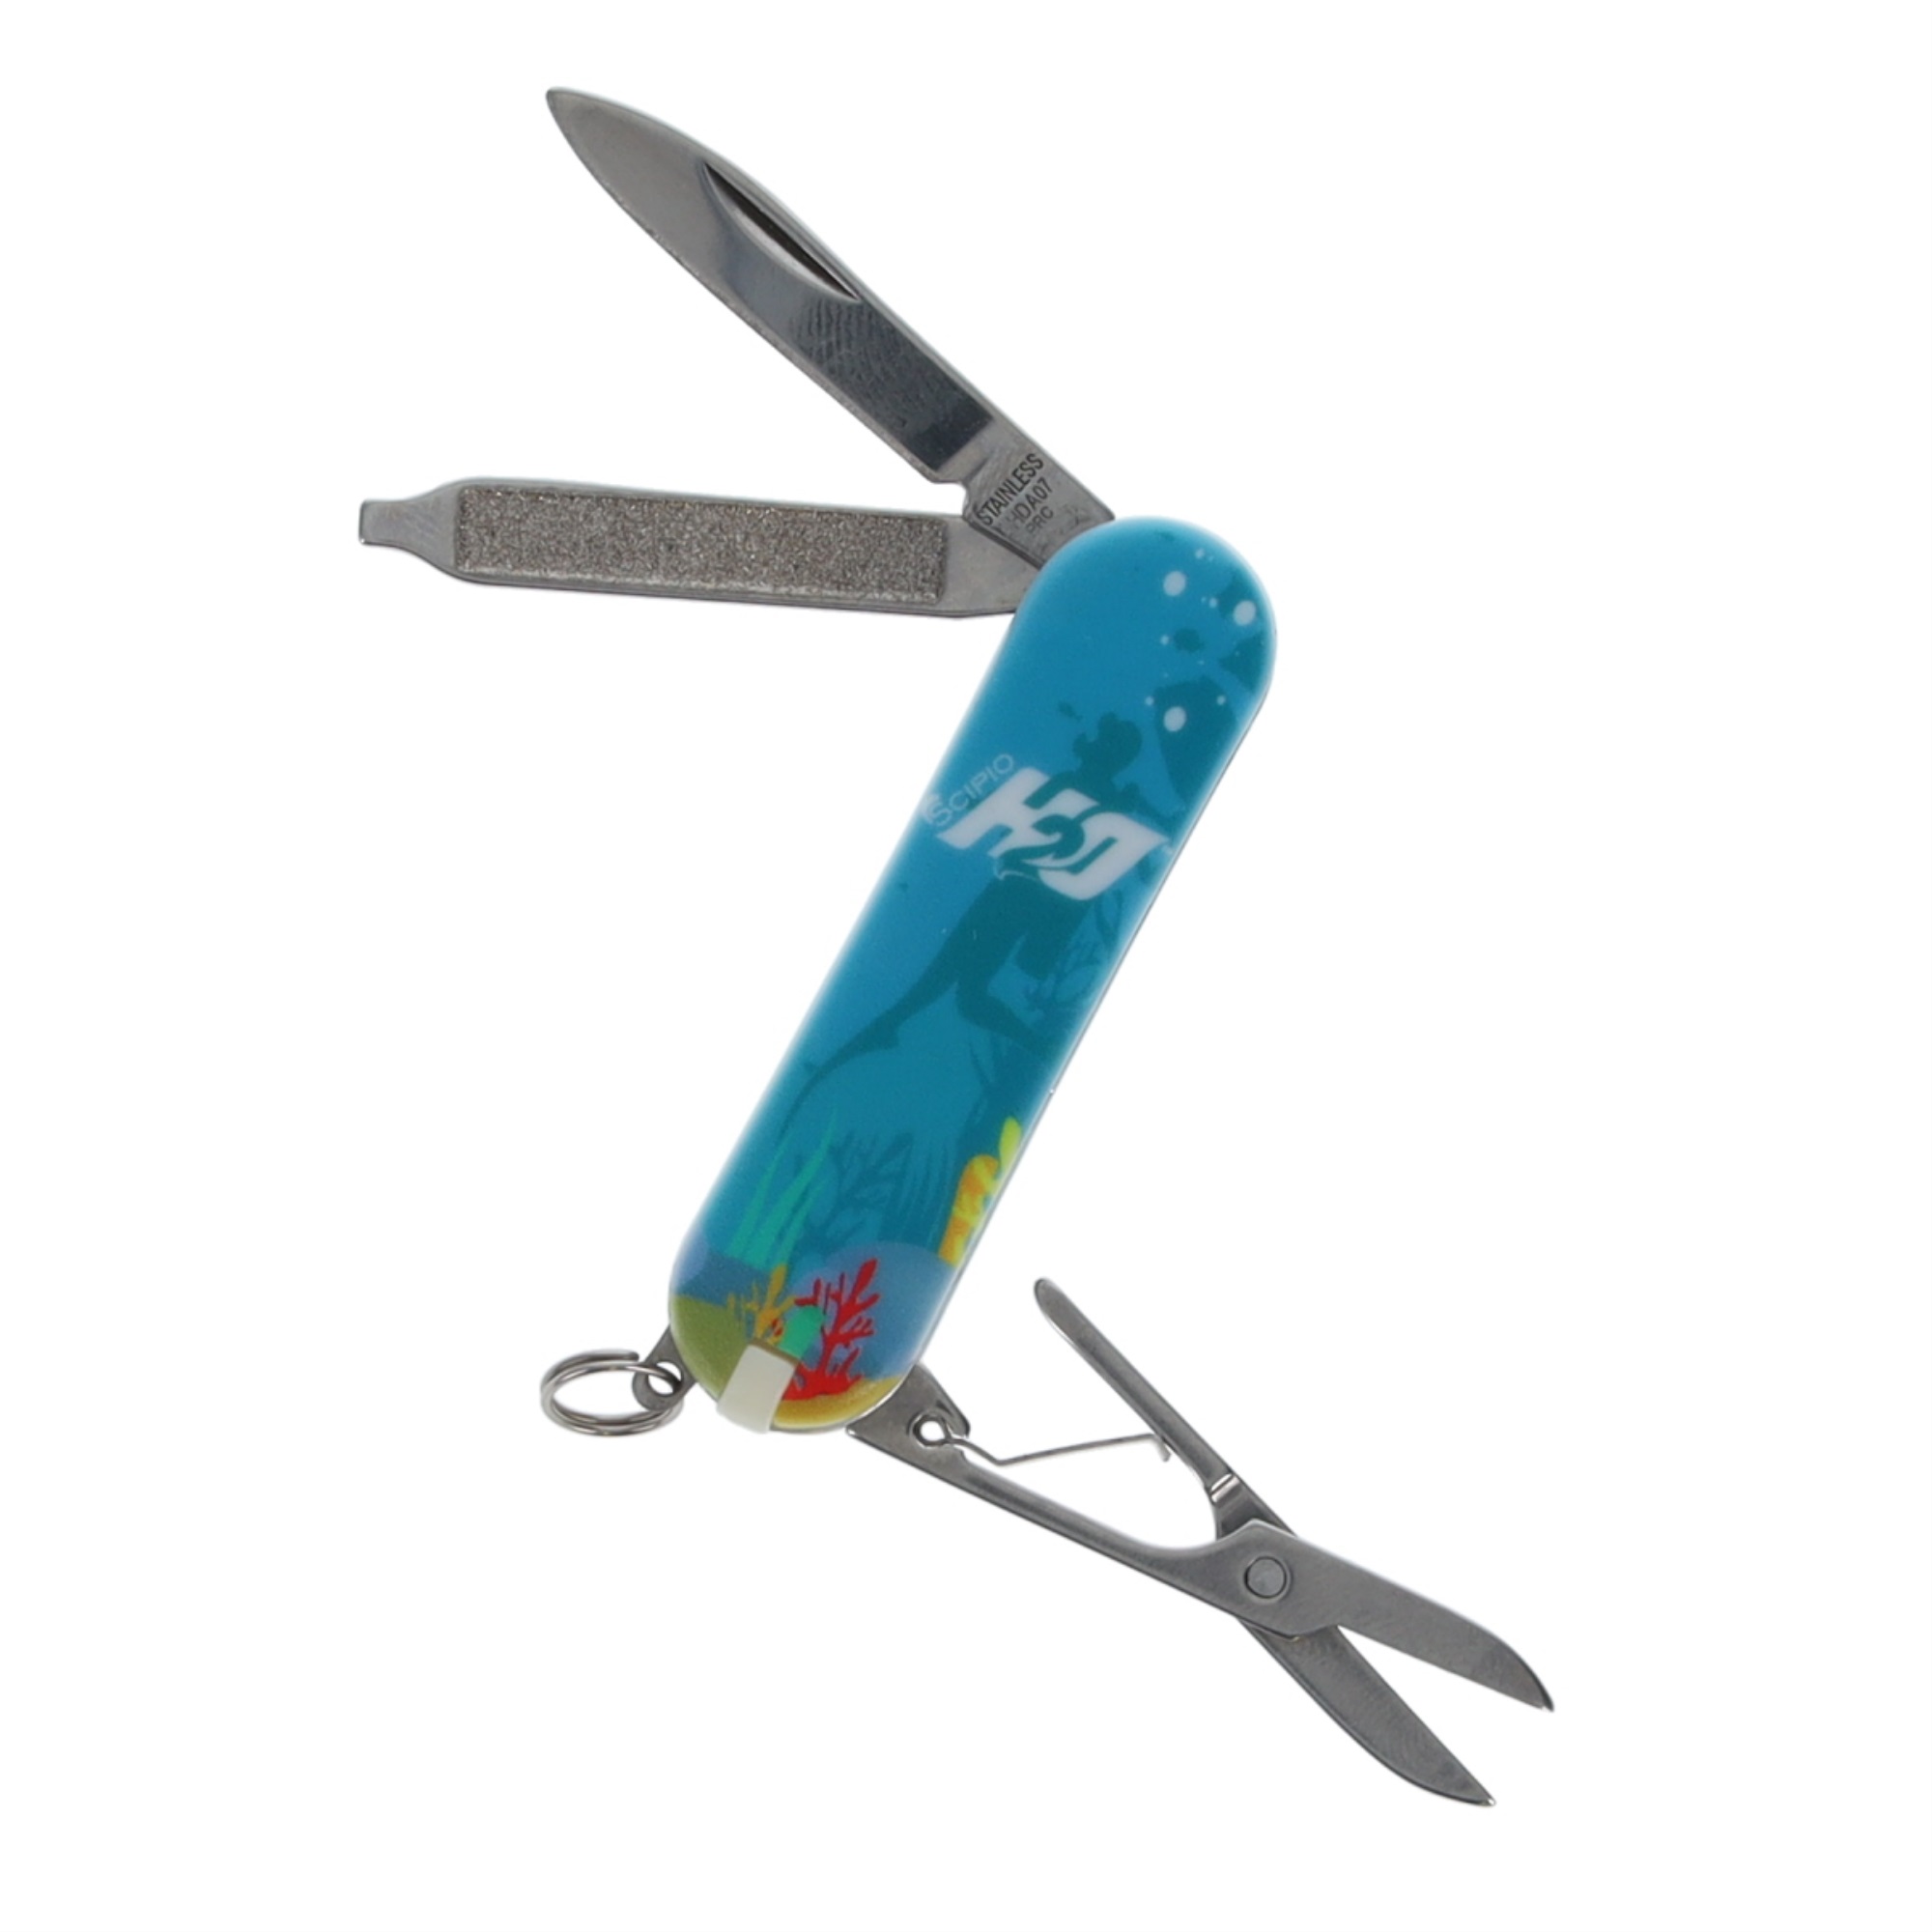 Scipio Multi-Tool Pocket Knife Item SHDA07 - Multi-Function Mini Folding Knife Novelty Keychain Ocean Theme - Tiny Multi